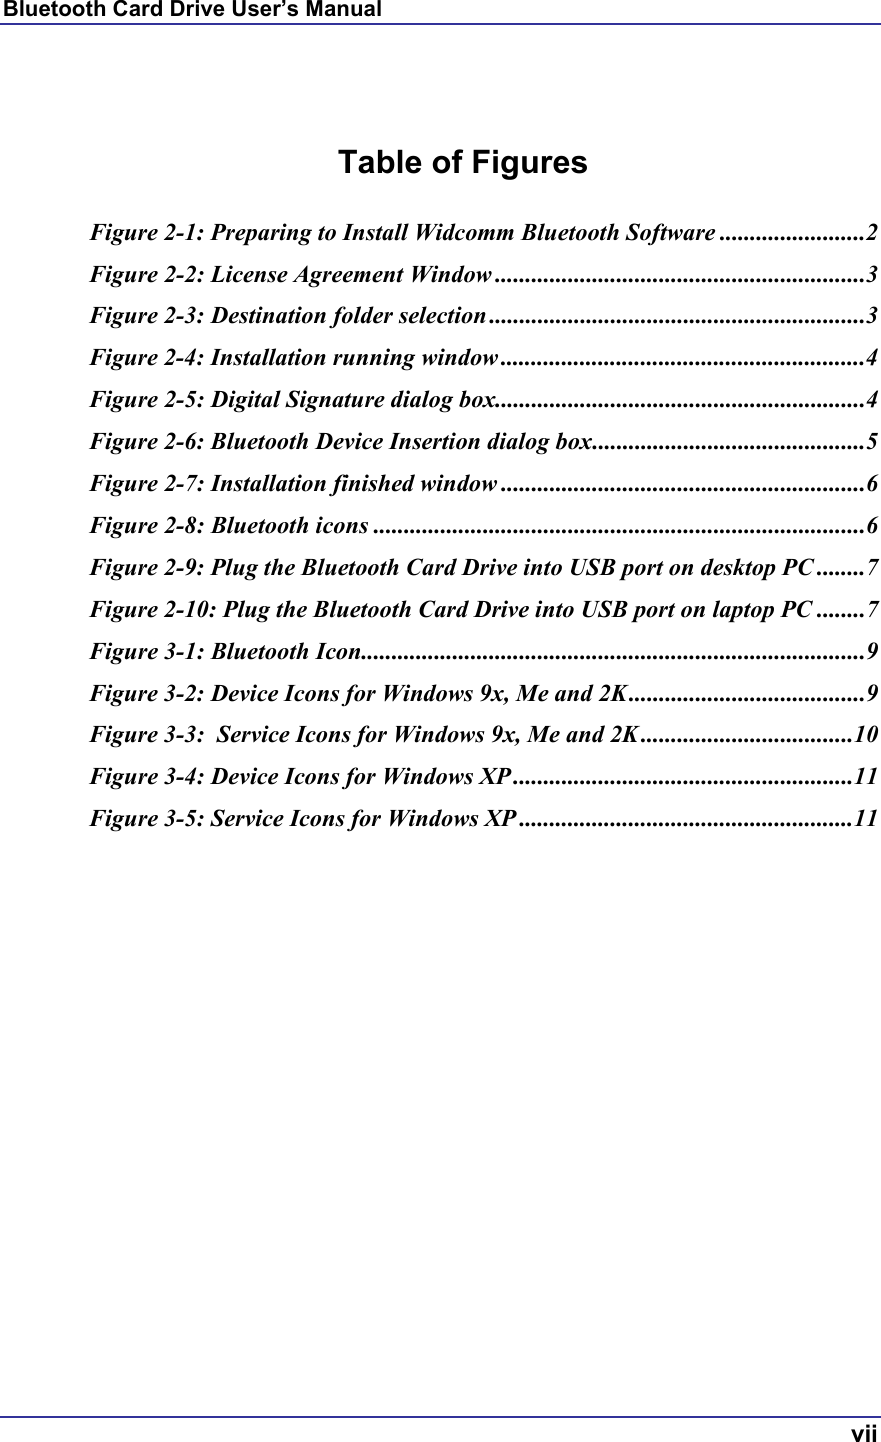 Bluetooth Card Drive User’s Manual  vii   Table of Figures  Figure 2-1: Preparing to Install Widcomm Bluetooth Software ........................2 Figure 2-2: License Agreement Window .............................................................3 Figure 2-3: Destination folder selection ..............................................................3 Figure 2-4: Installation running window ............................................................4 Figure 2-5: Digital Signature dialog box.............................................................4 Figure 2-6: Bluetooth Device Insertion dialog box.............................................5 Figure 2-7: Installation finished window ............................................................6 Figure 2-8: Bluetooth icons .................................................................................6 Figure 2-9: Plug the Bluetooth Card Drive into USB port on desktop PC ........7 Figure 2-10: Plug the Bluetooth Card Drive into USB port on laptop PC ........7 Figure 3-1: Bluetooth Icon...................................................................................9 Figure 3-2: Device Icons for Windows 9x, Me and 2K.......................................9 Figure 3-3:  Service Icons for Windows 9x, Me and 2K...................................10 Figure 3-4: Device Icons for Windows XP ........................................................11 Figure 3-5: Service Icons for Windows XP .......................................................11   